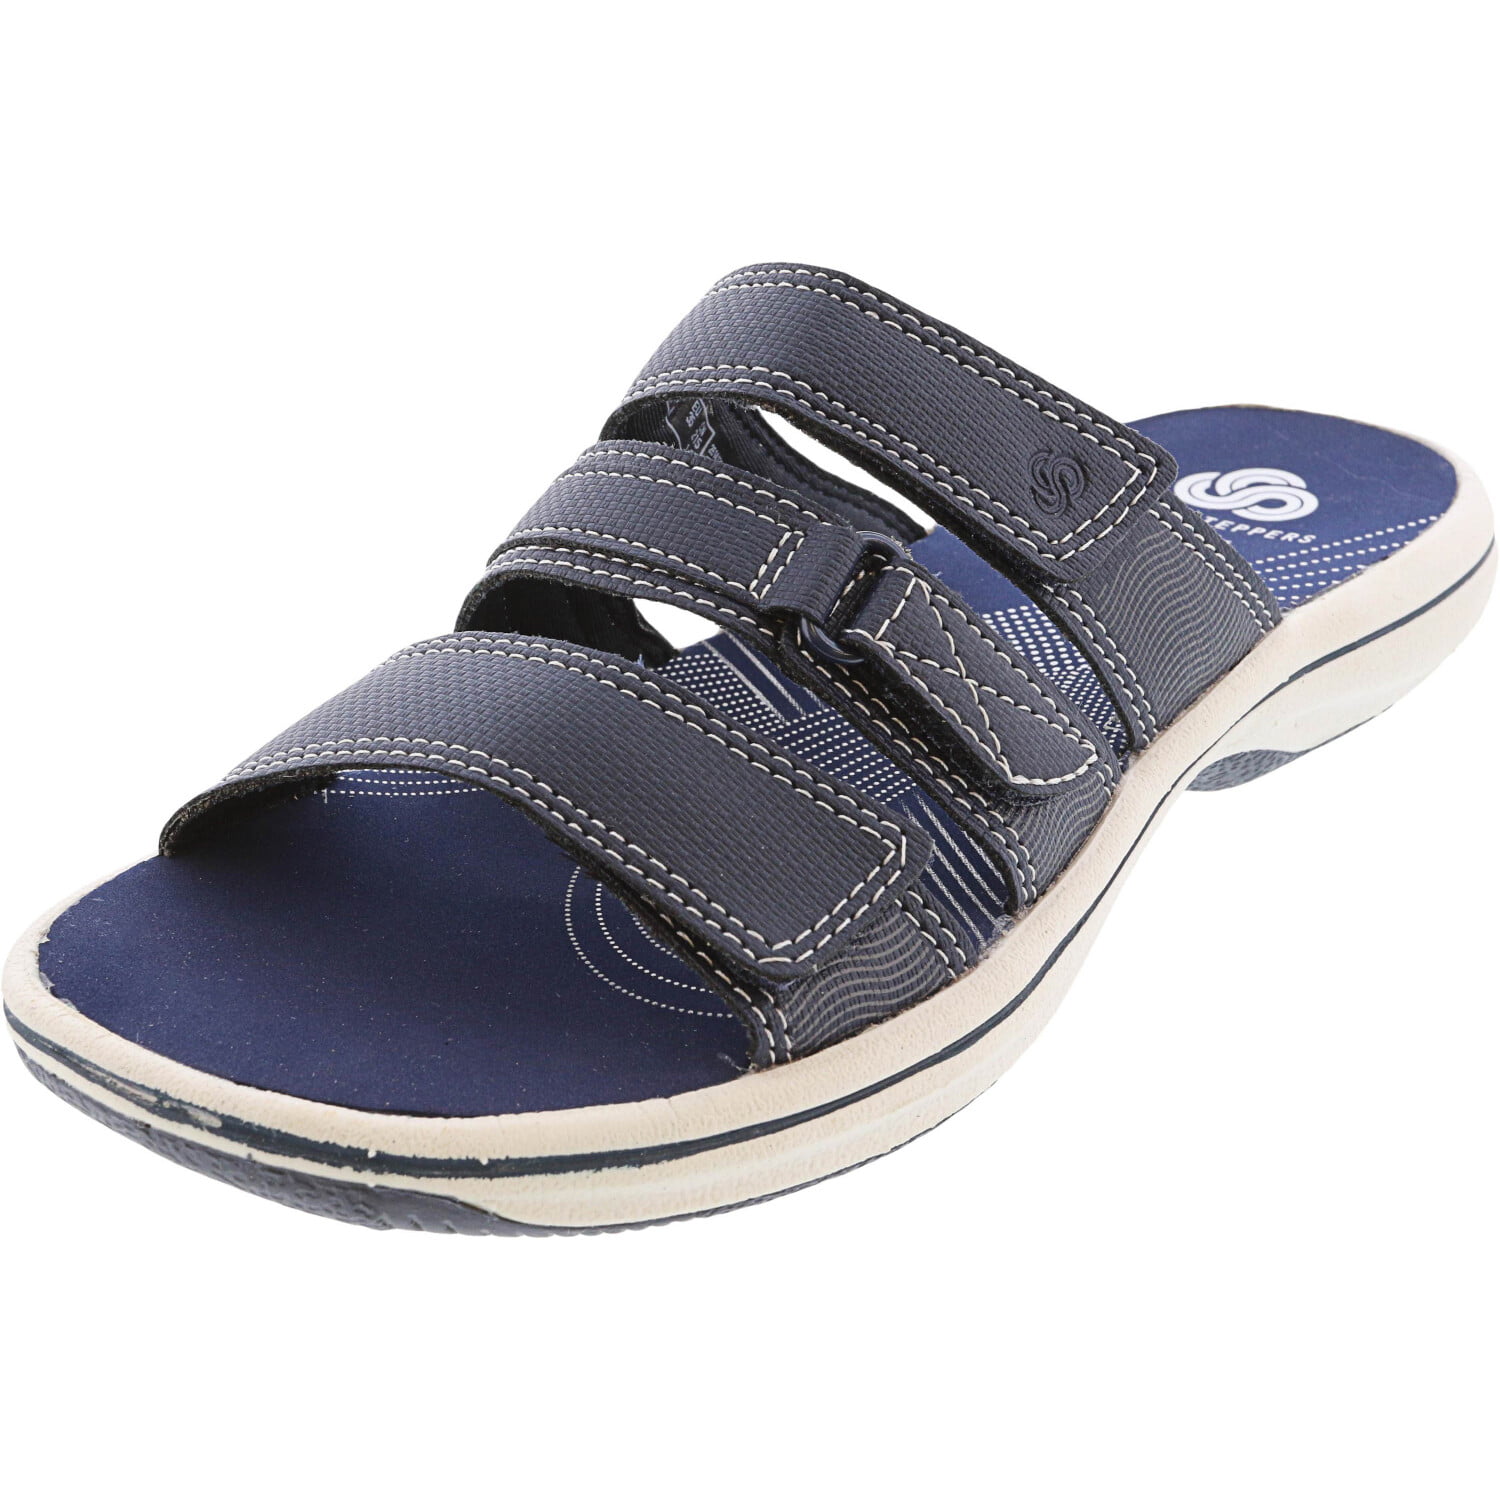 clarks women's brinkley coast slide sandal